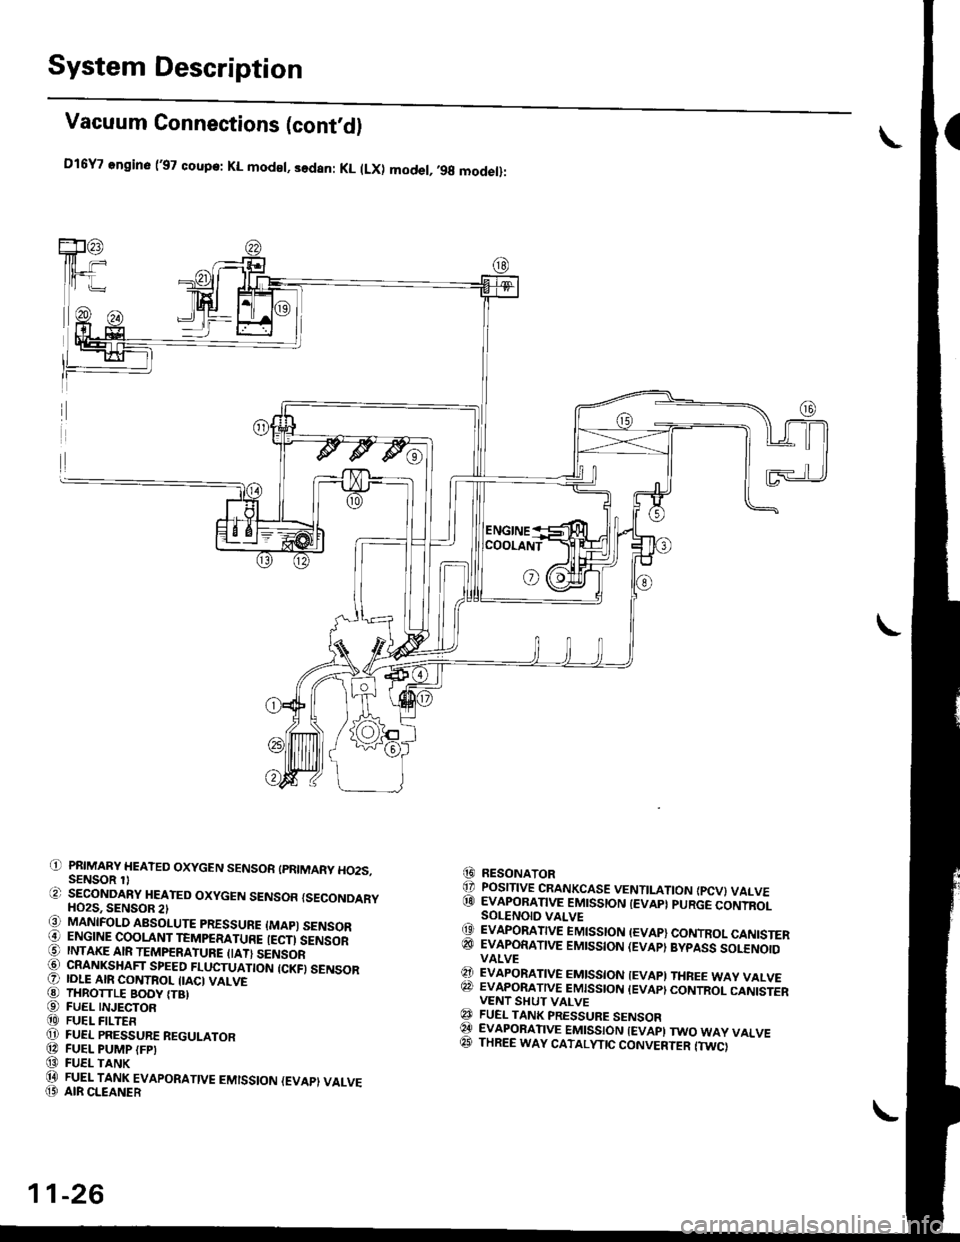 HONDA CIVIC 1997 6.G Owners Manual System Description
Vacuum Connections (contd)
Dl6Y7 angin6 (97 coup.: KL mod€l, sedan: KL (LX) model,,9g modet):
i1] PRIMARY HEATED OXYGEN SENSOR (PRIMARY HO2S,SENSOR 1)E) SECONDARY HEATED OXYGEN 